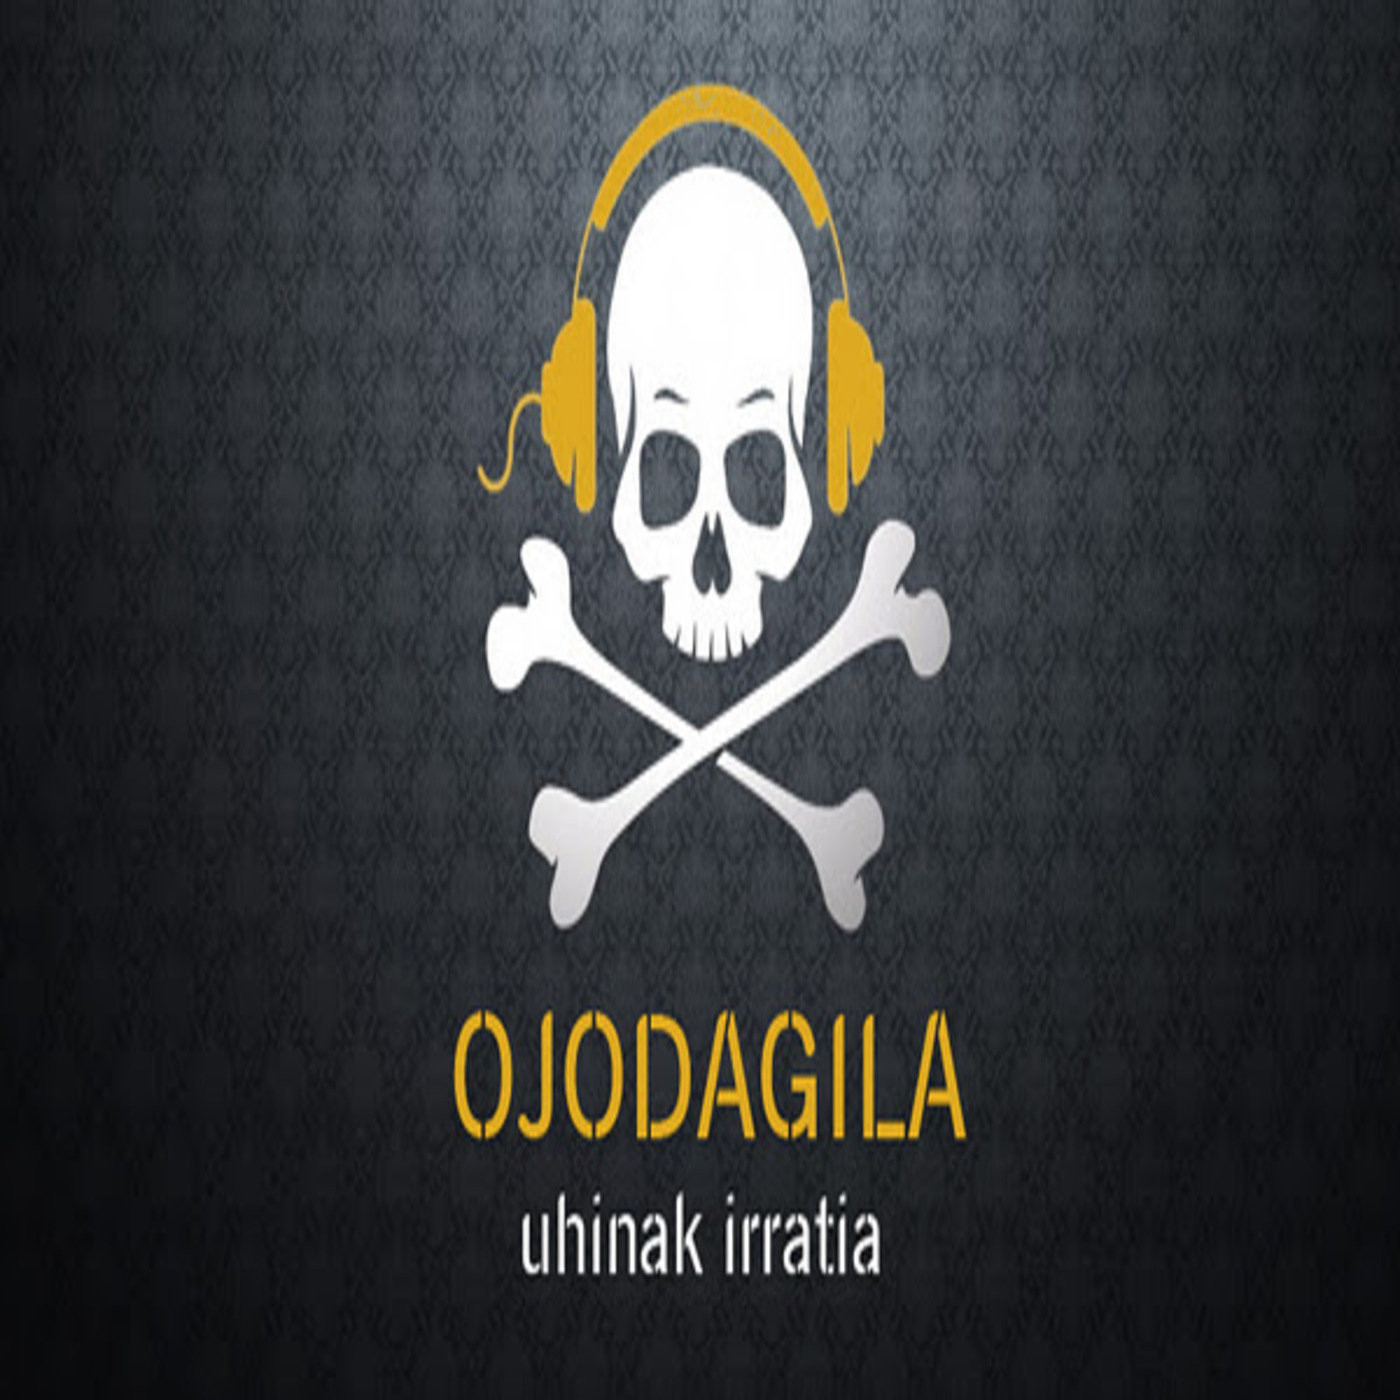 Podcast de Ojodagila